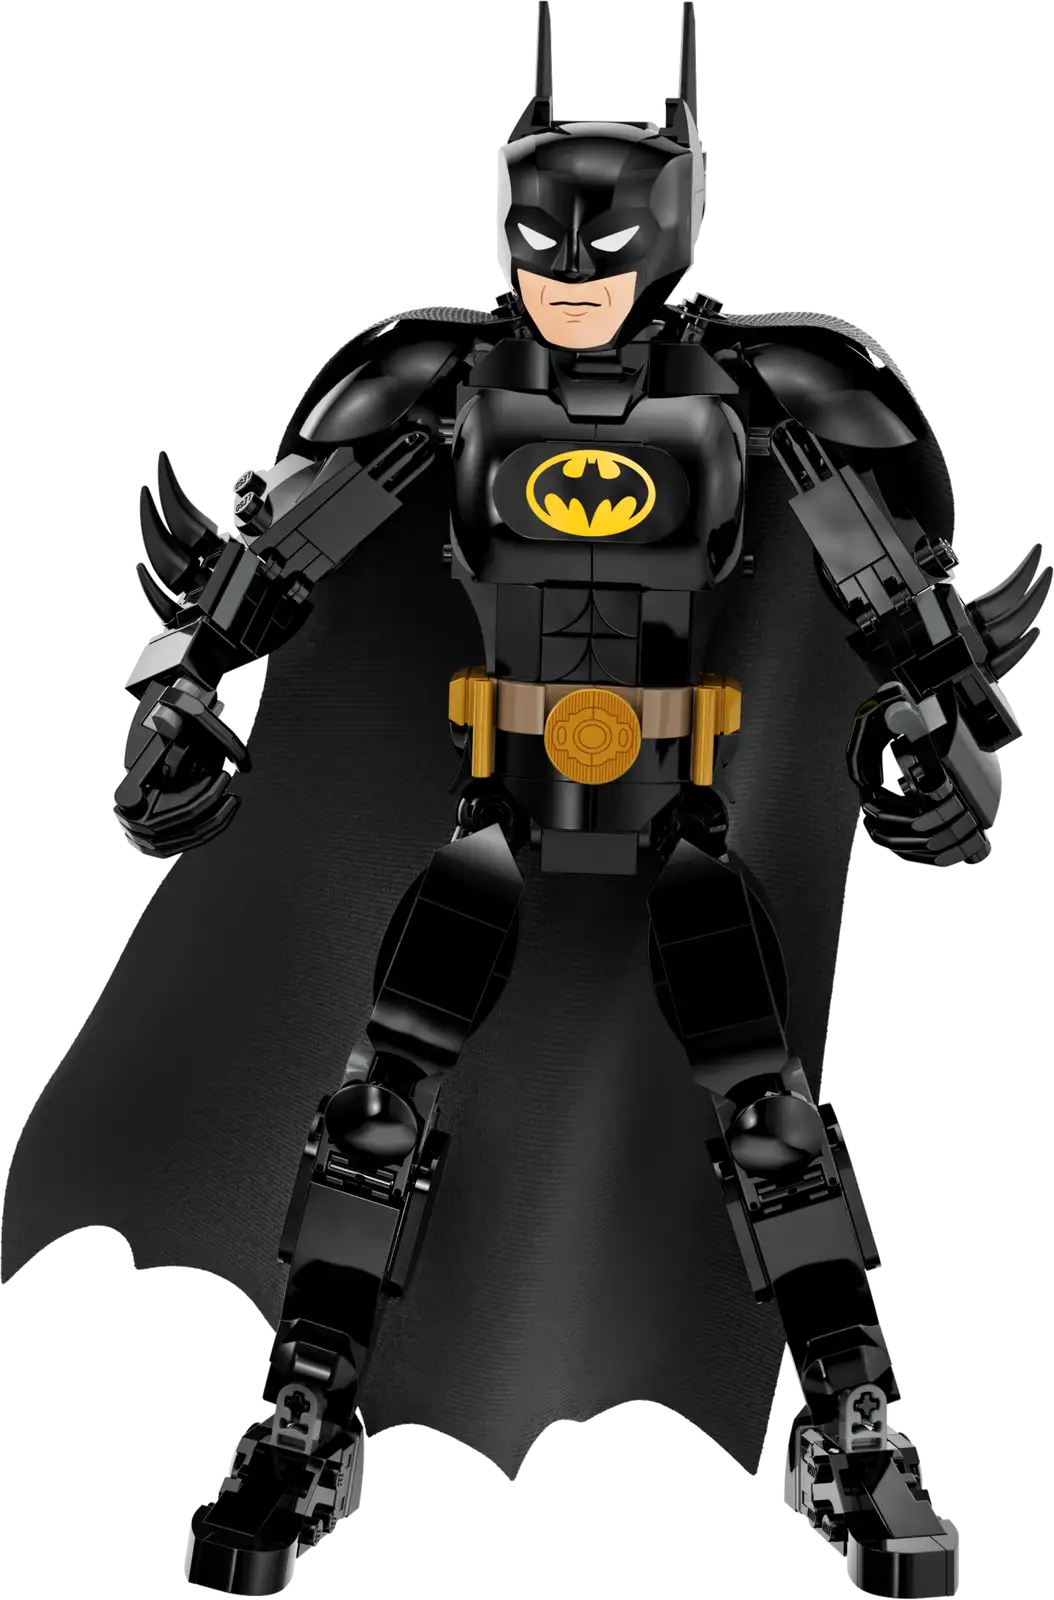 Lego Batman™ Construction Figure